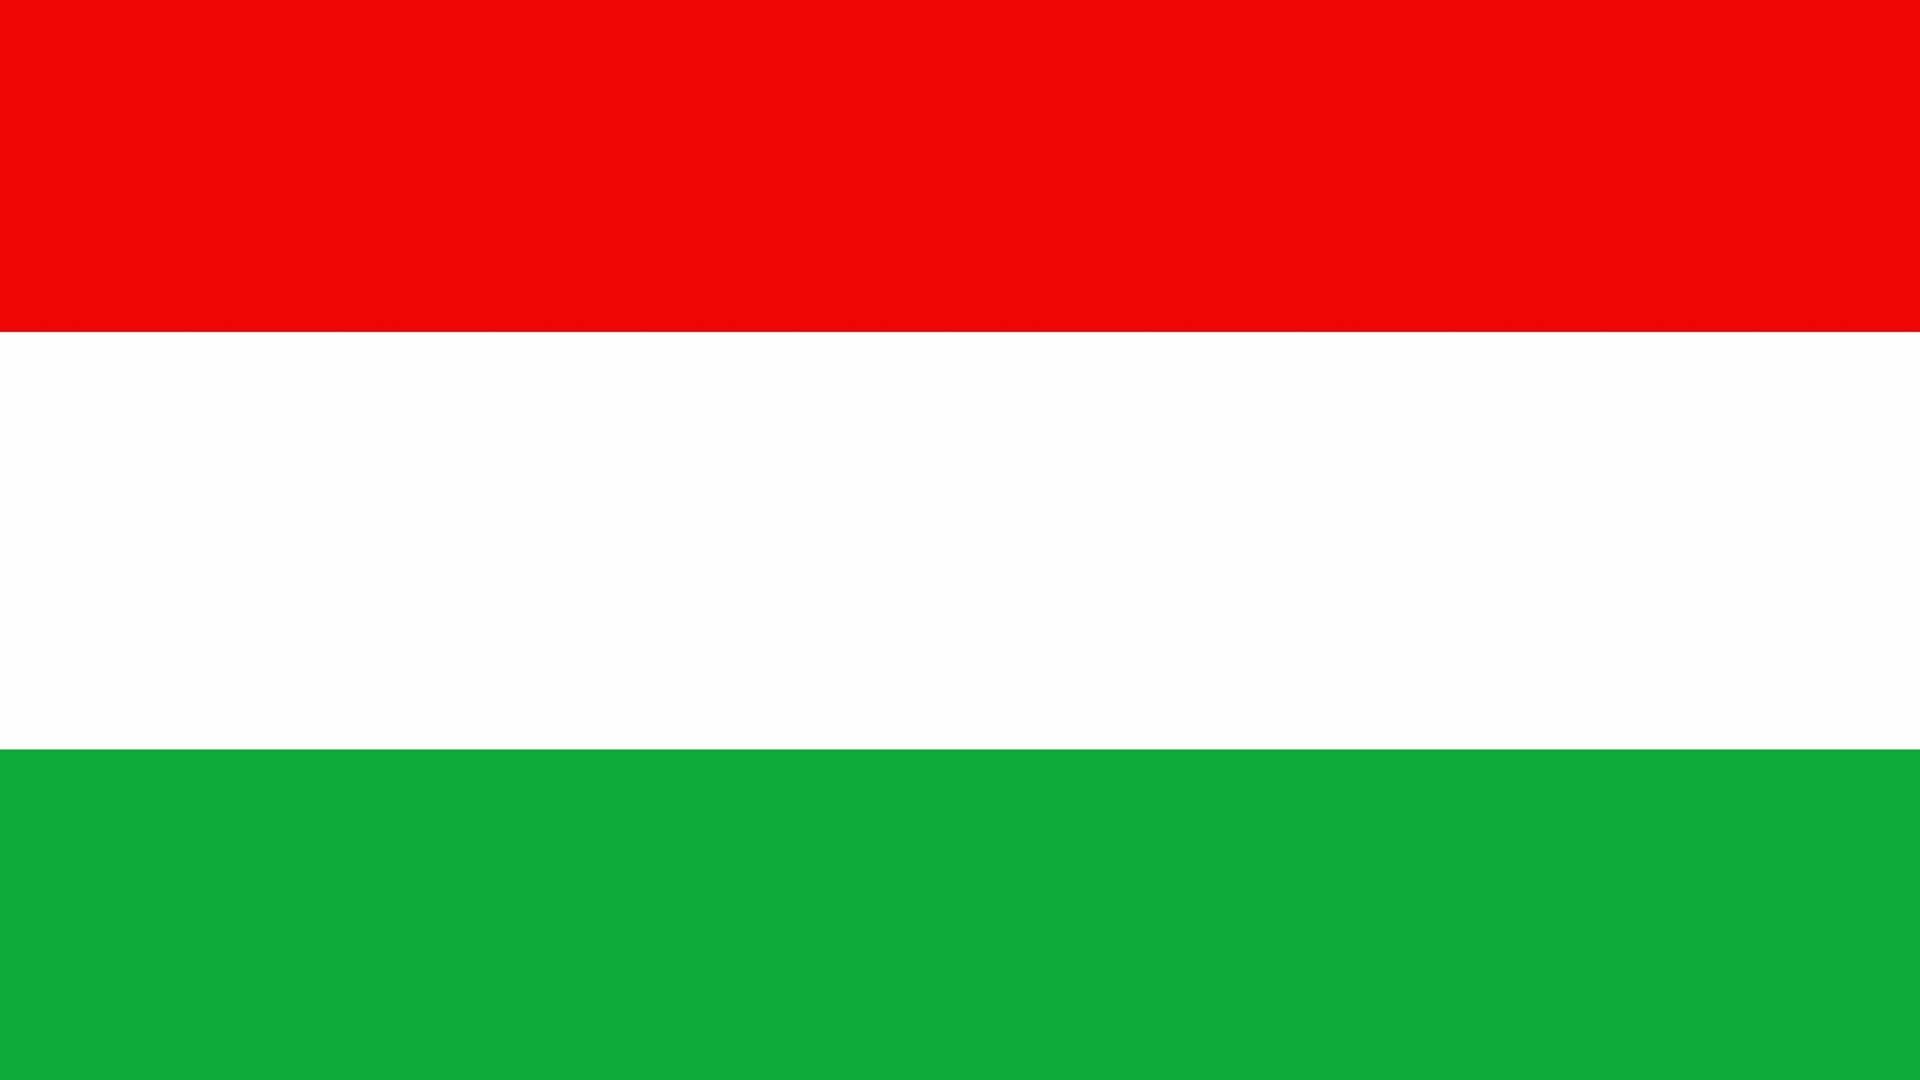 Flagge - Ungarn